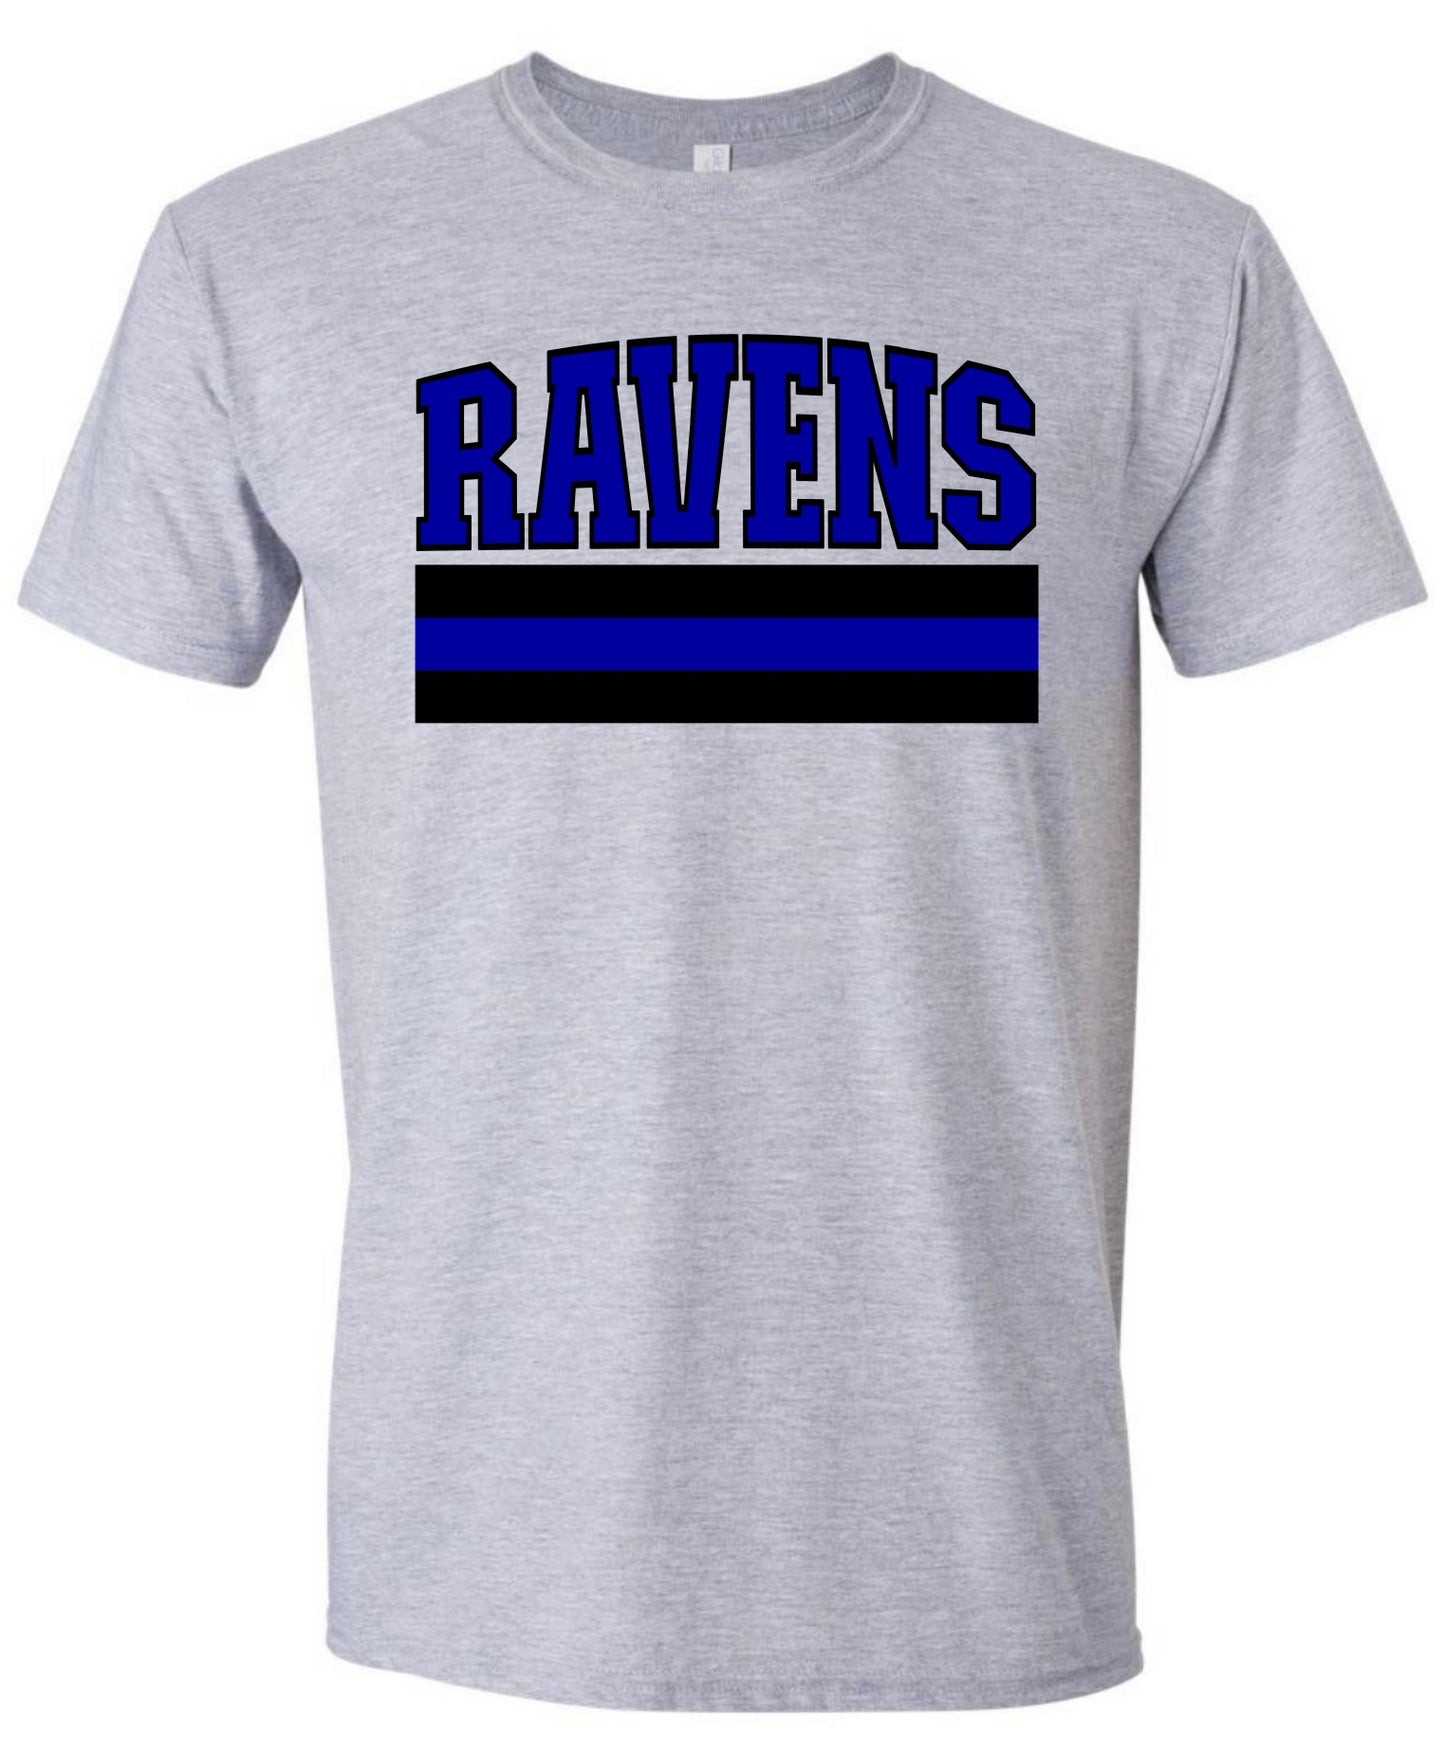 Ravens Varsity Lines Tshirt